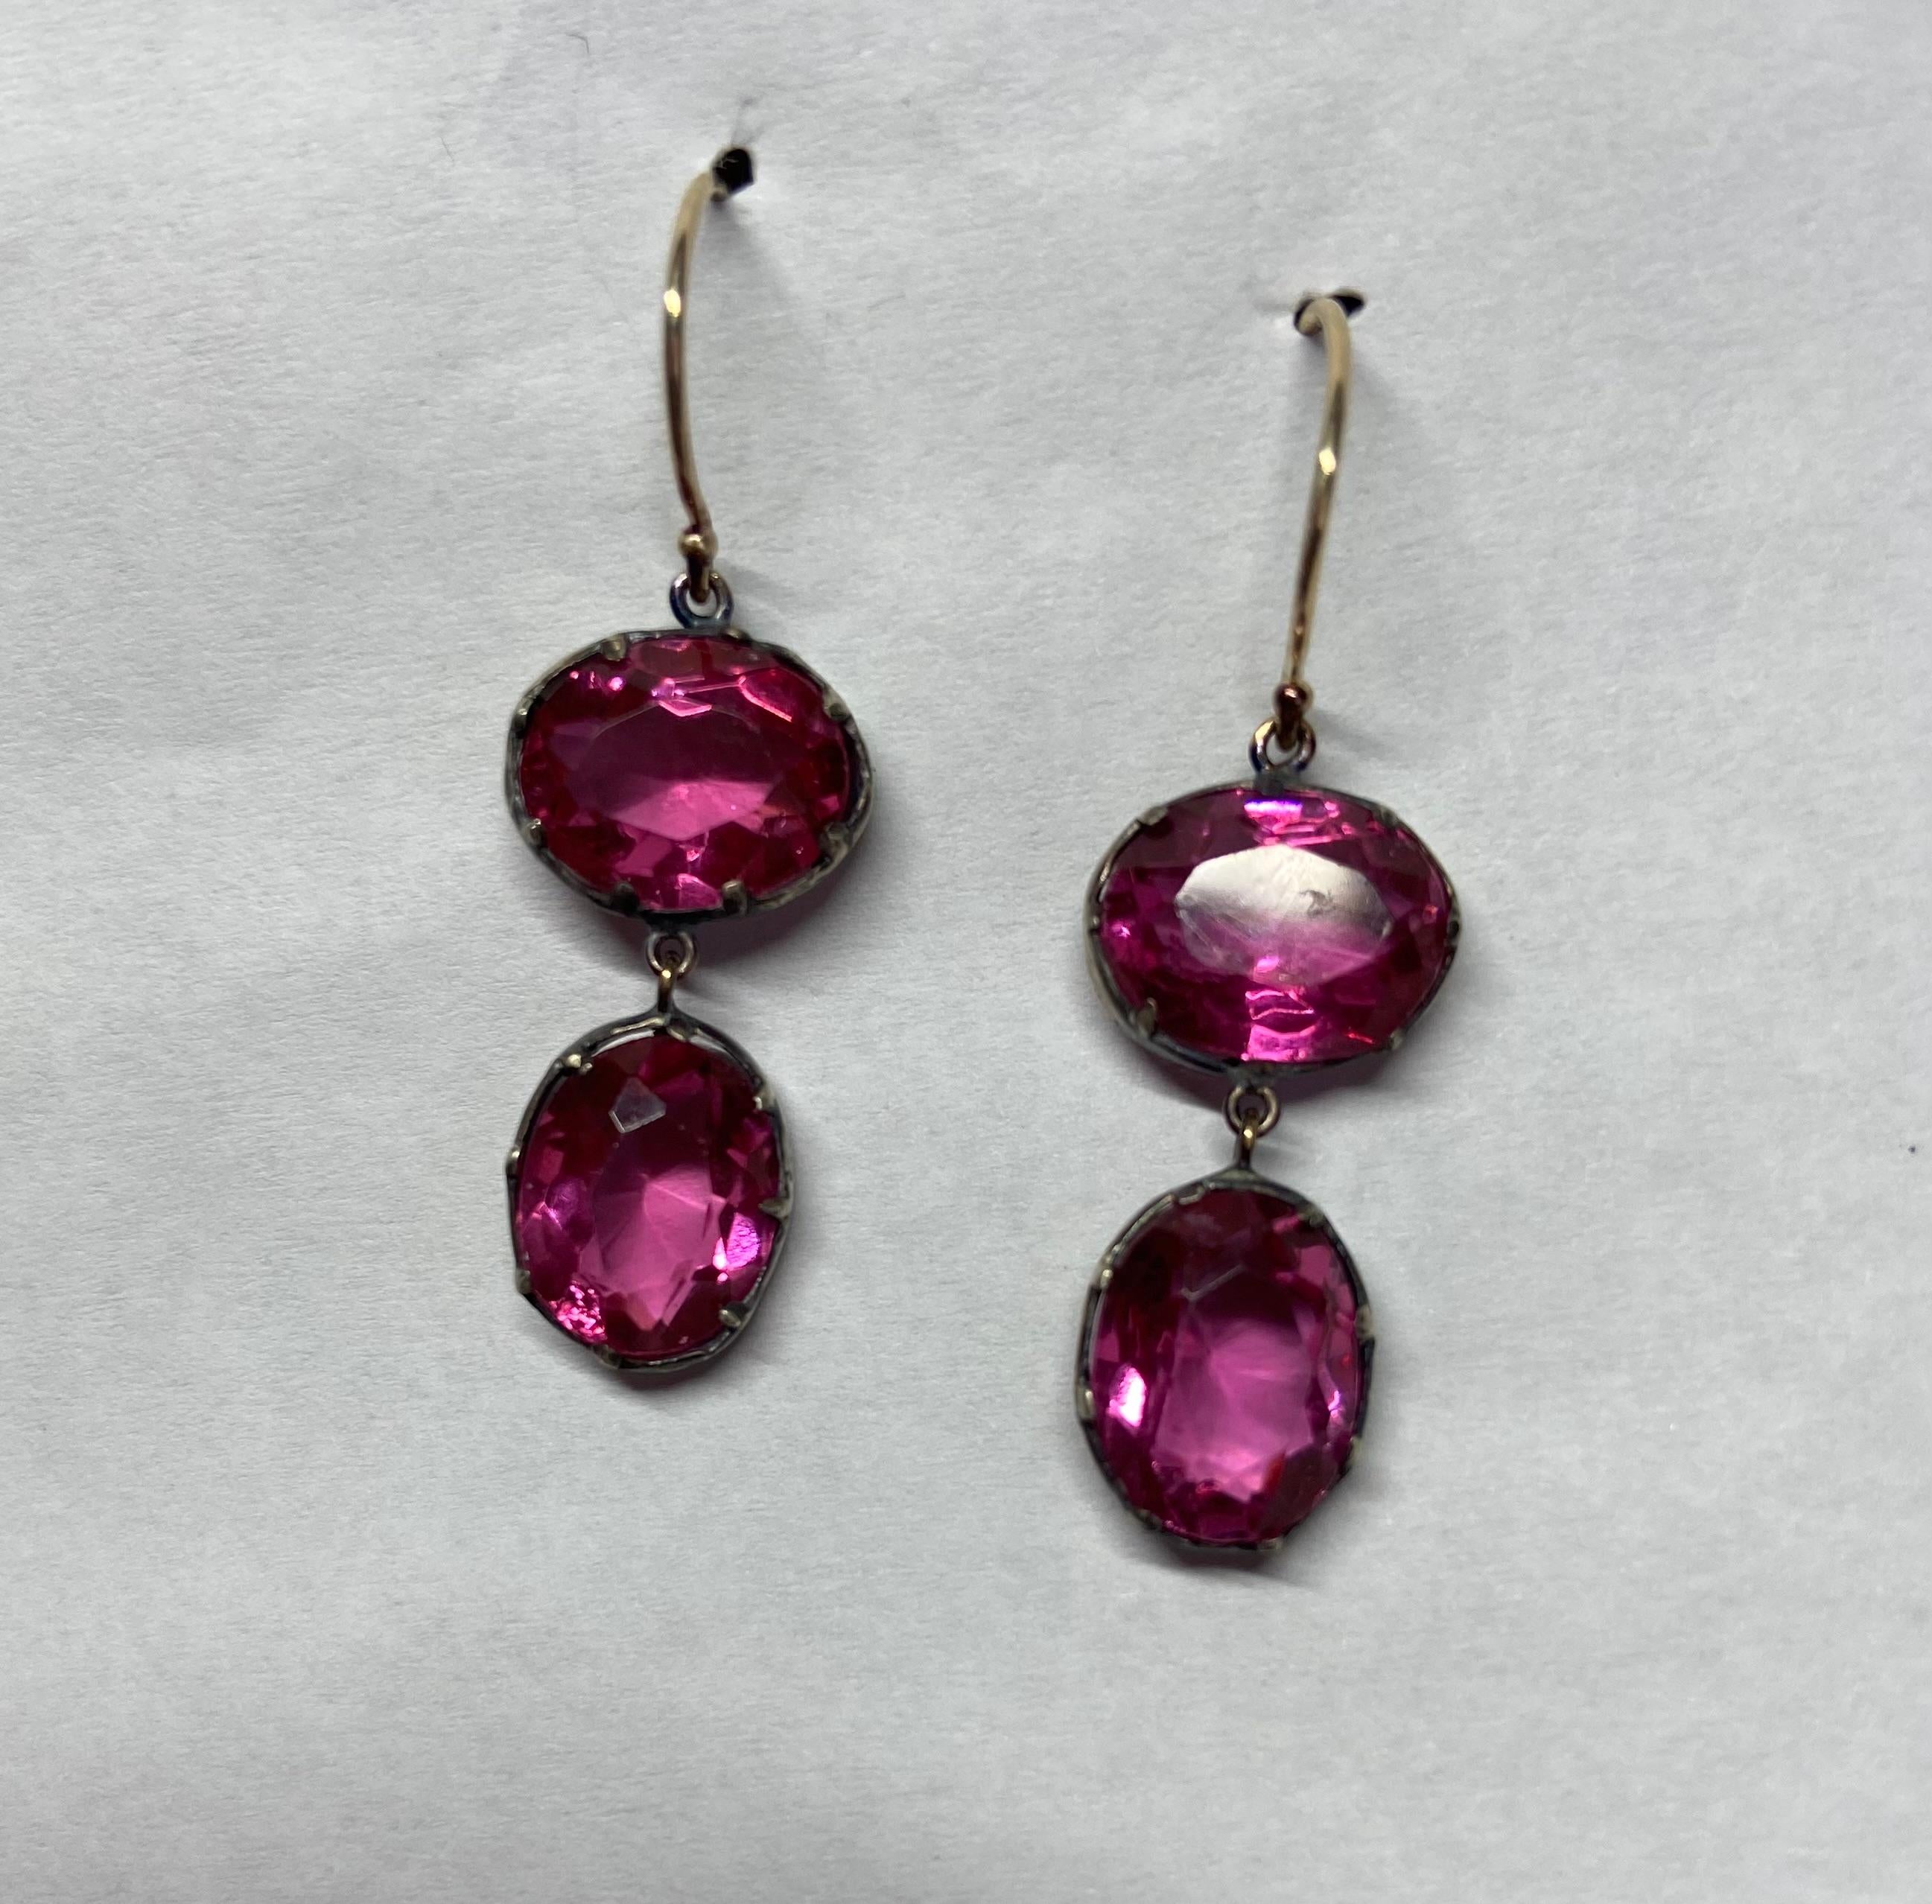 Women's or Men's Antique Victorian Double Pink Paste Earrings